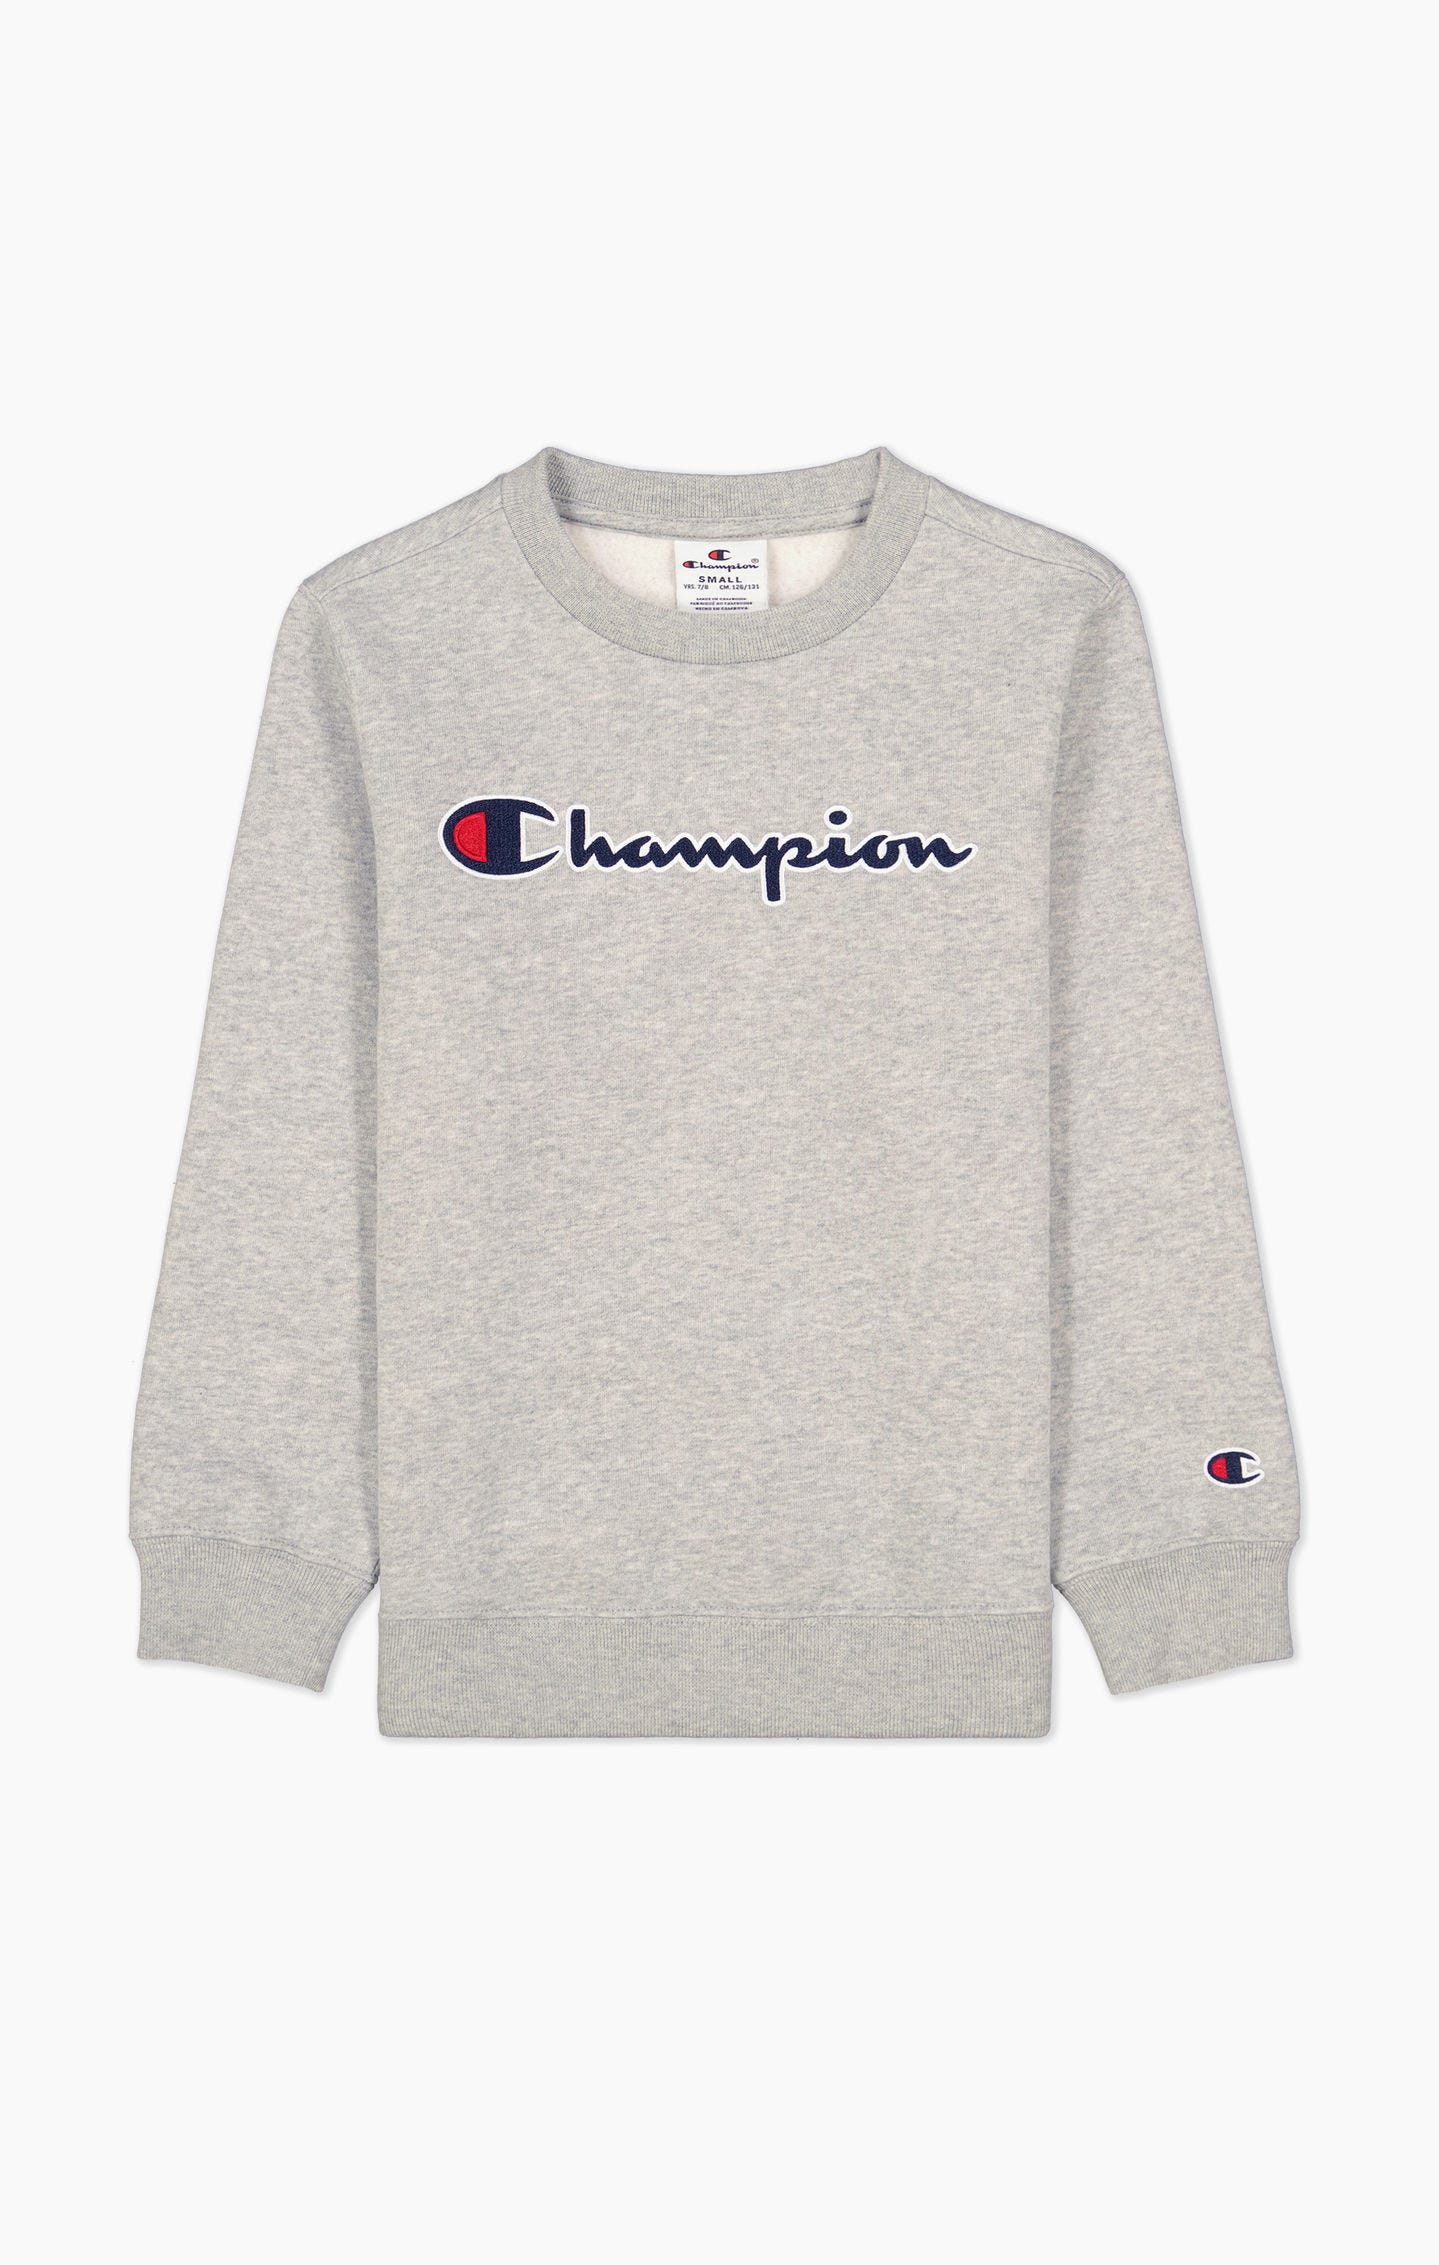 Sweatshirt à logo Champion brodé - Garçons